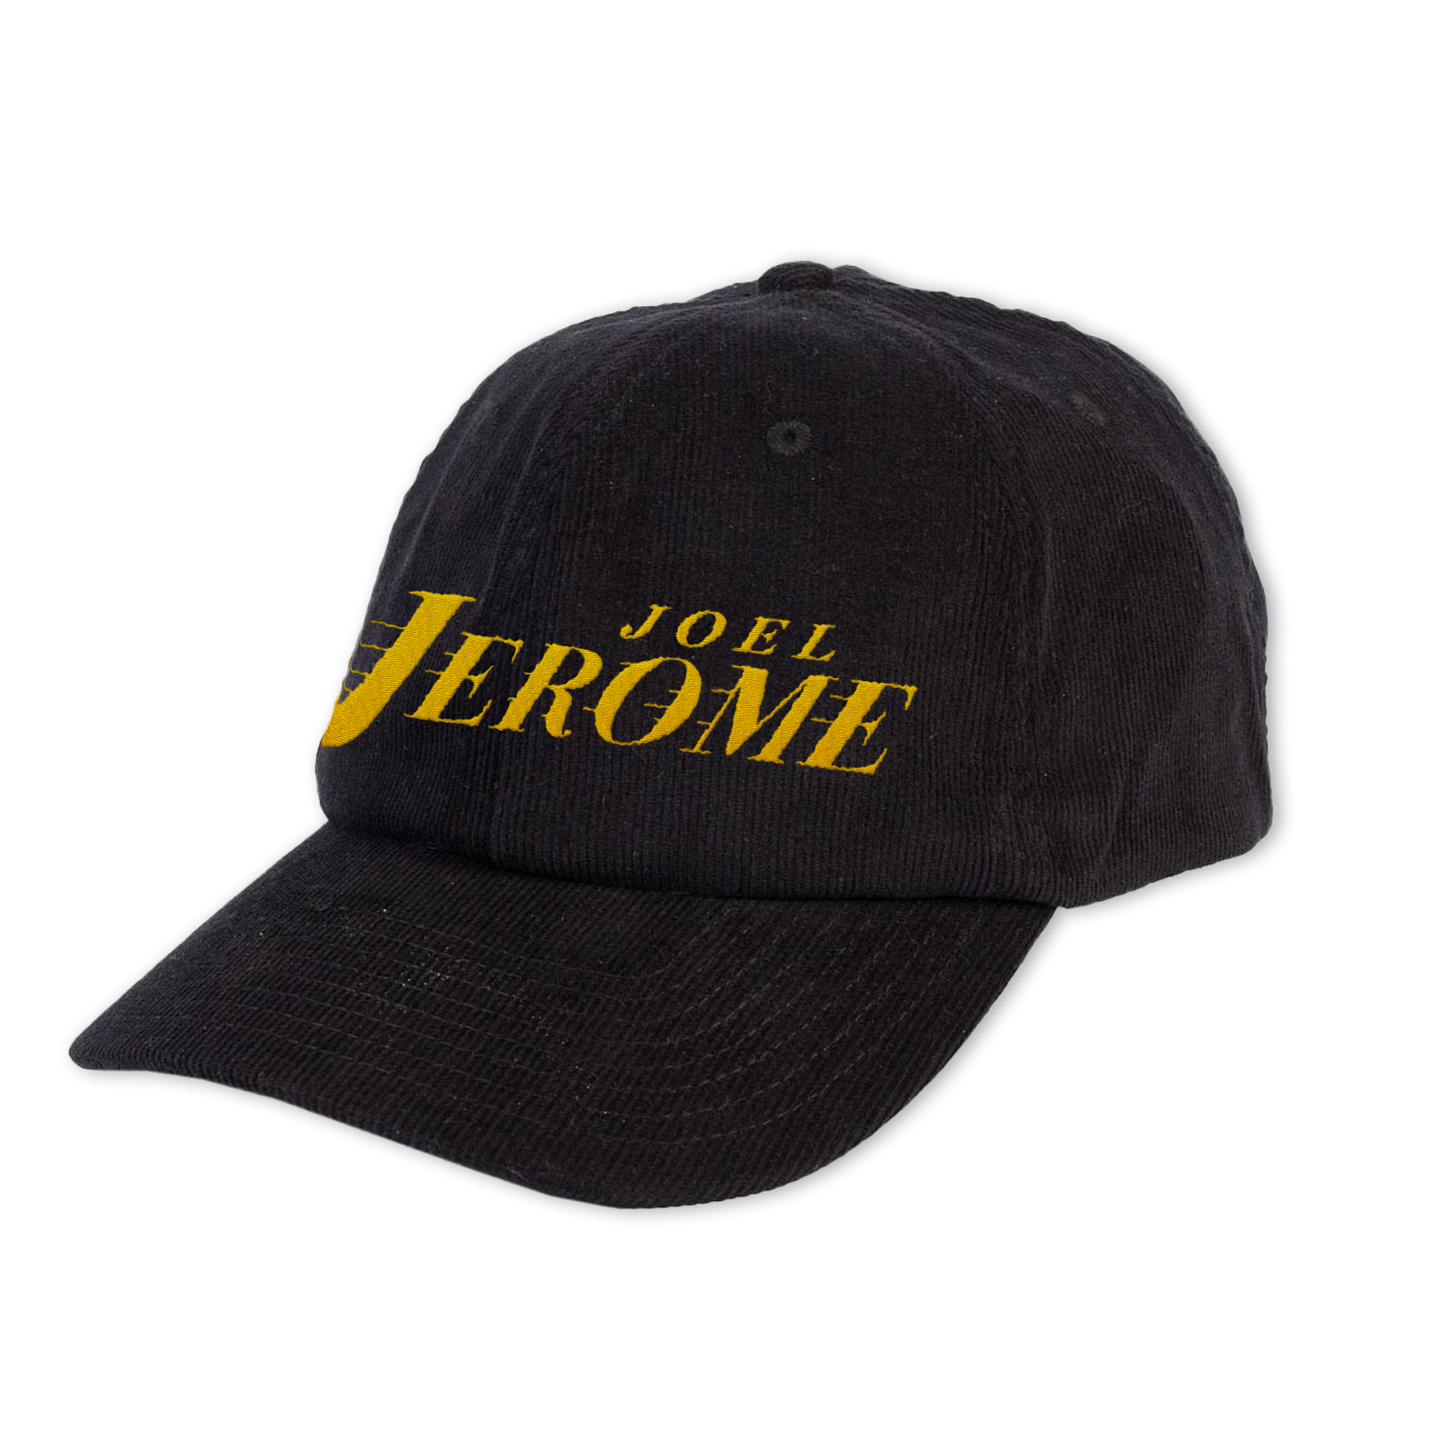 Joel Jerome - Corduroy Hat